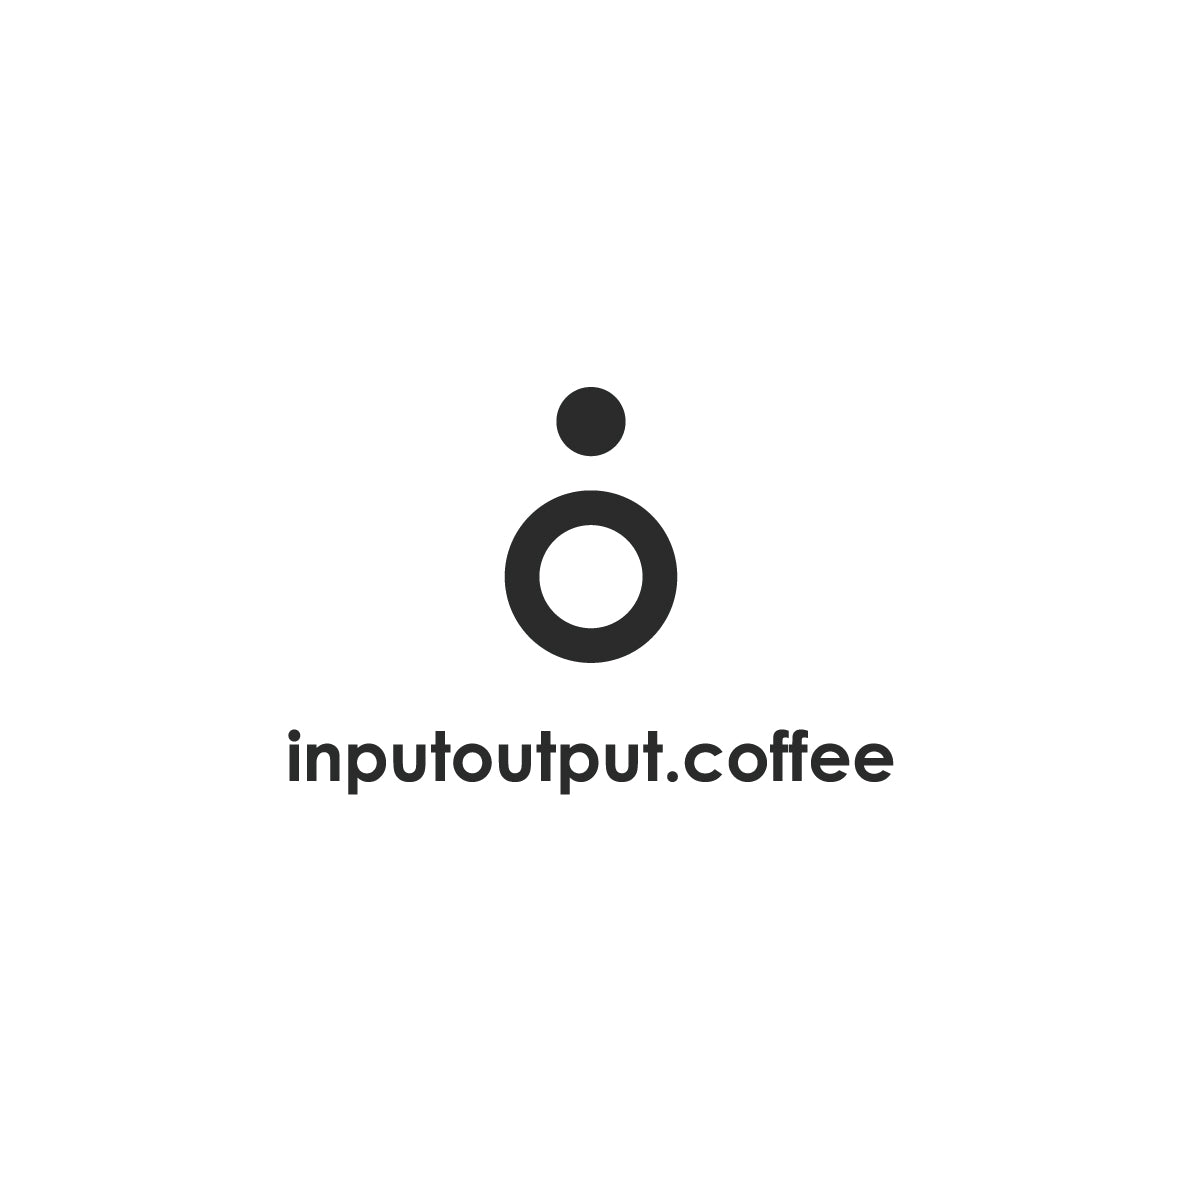 Contour Drip - by inputoutput.coffee